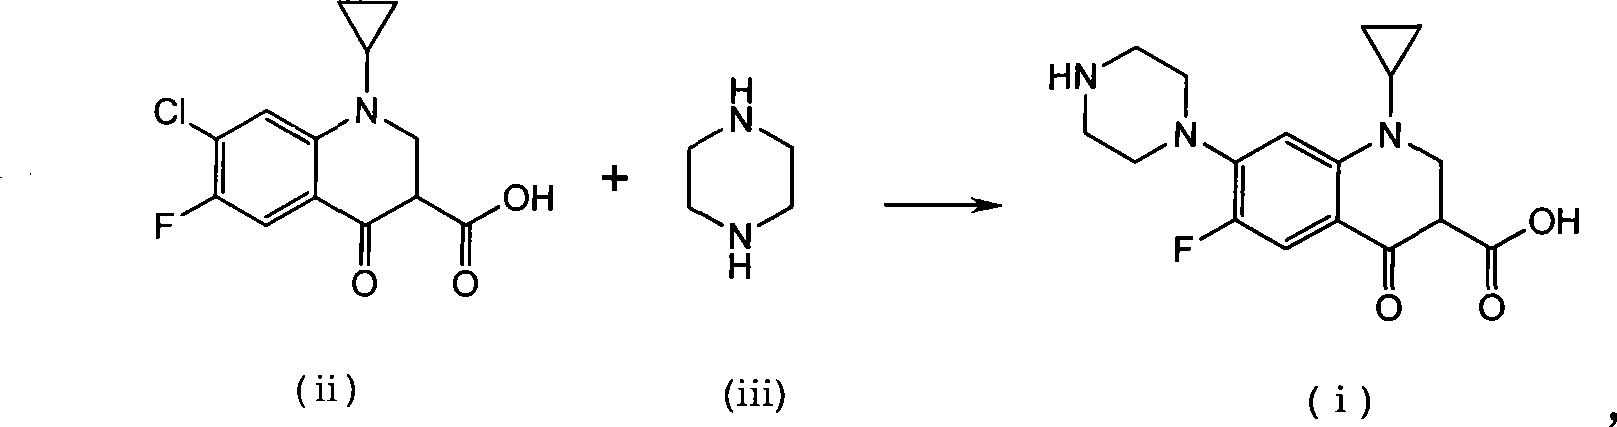 Method for preparing ciprofloxacin by piperazine reaction